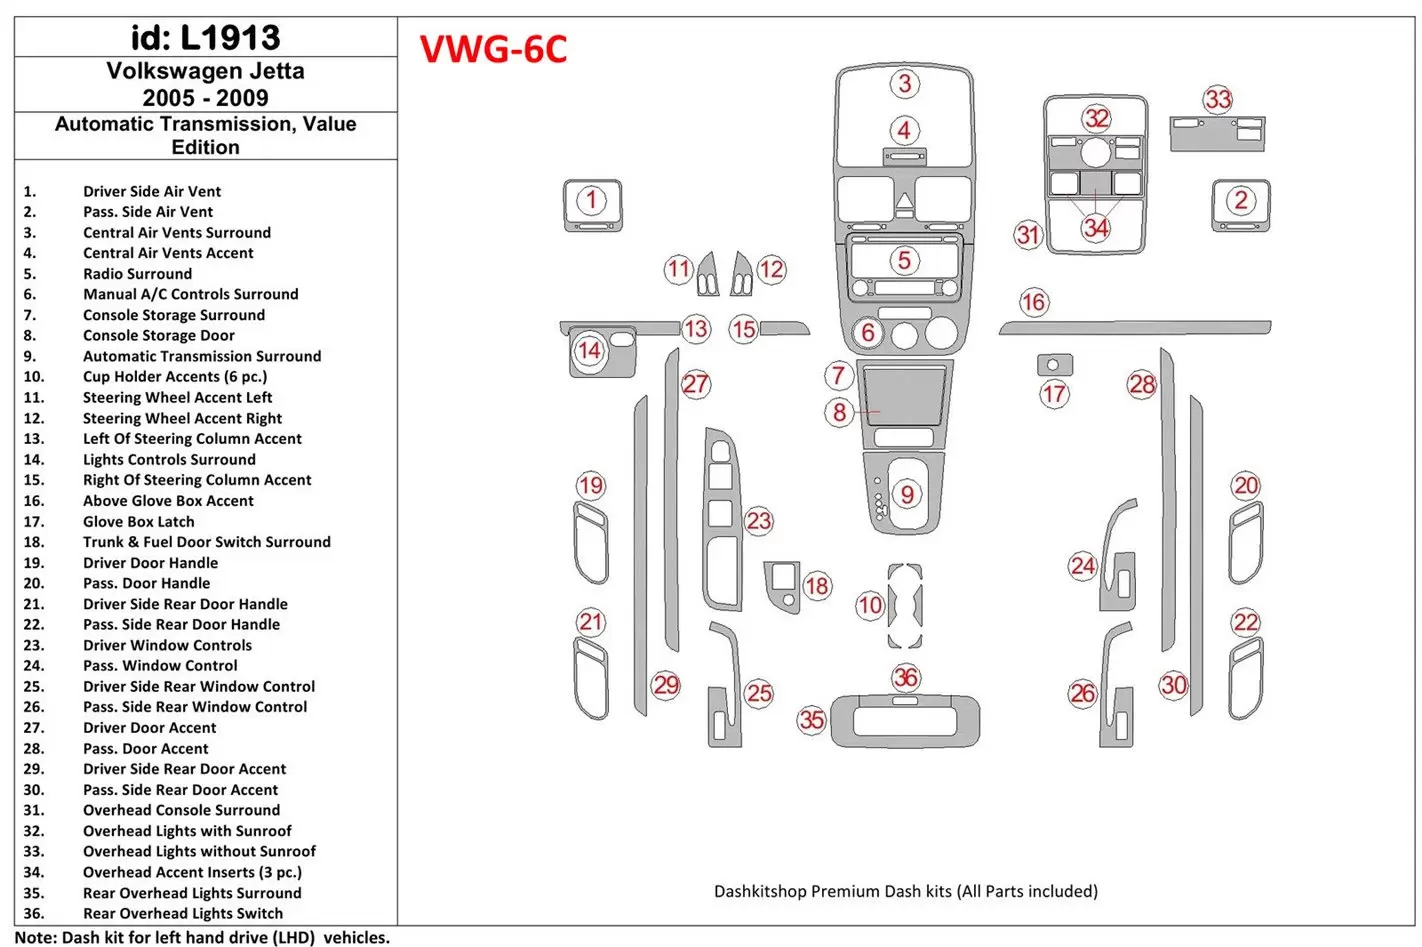 Volkswagen Jetta 2005-2009 Automatic Gear, Value Edition Interior BD Dash Trim Kit